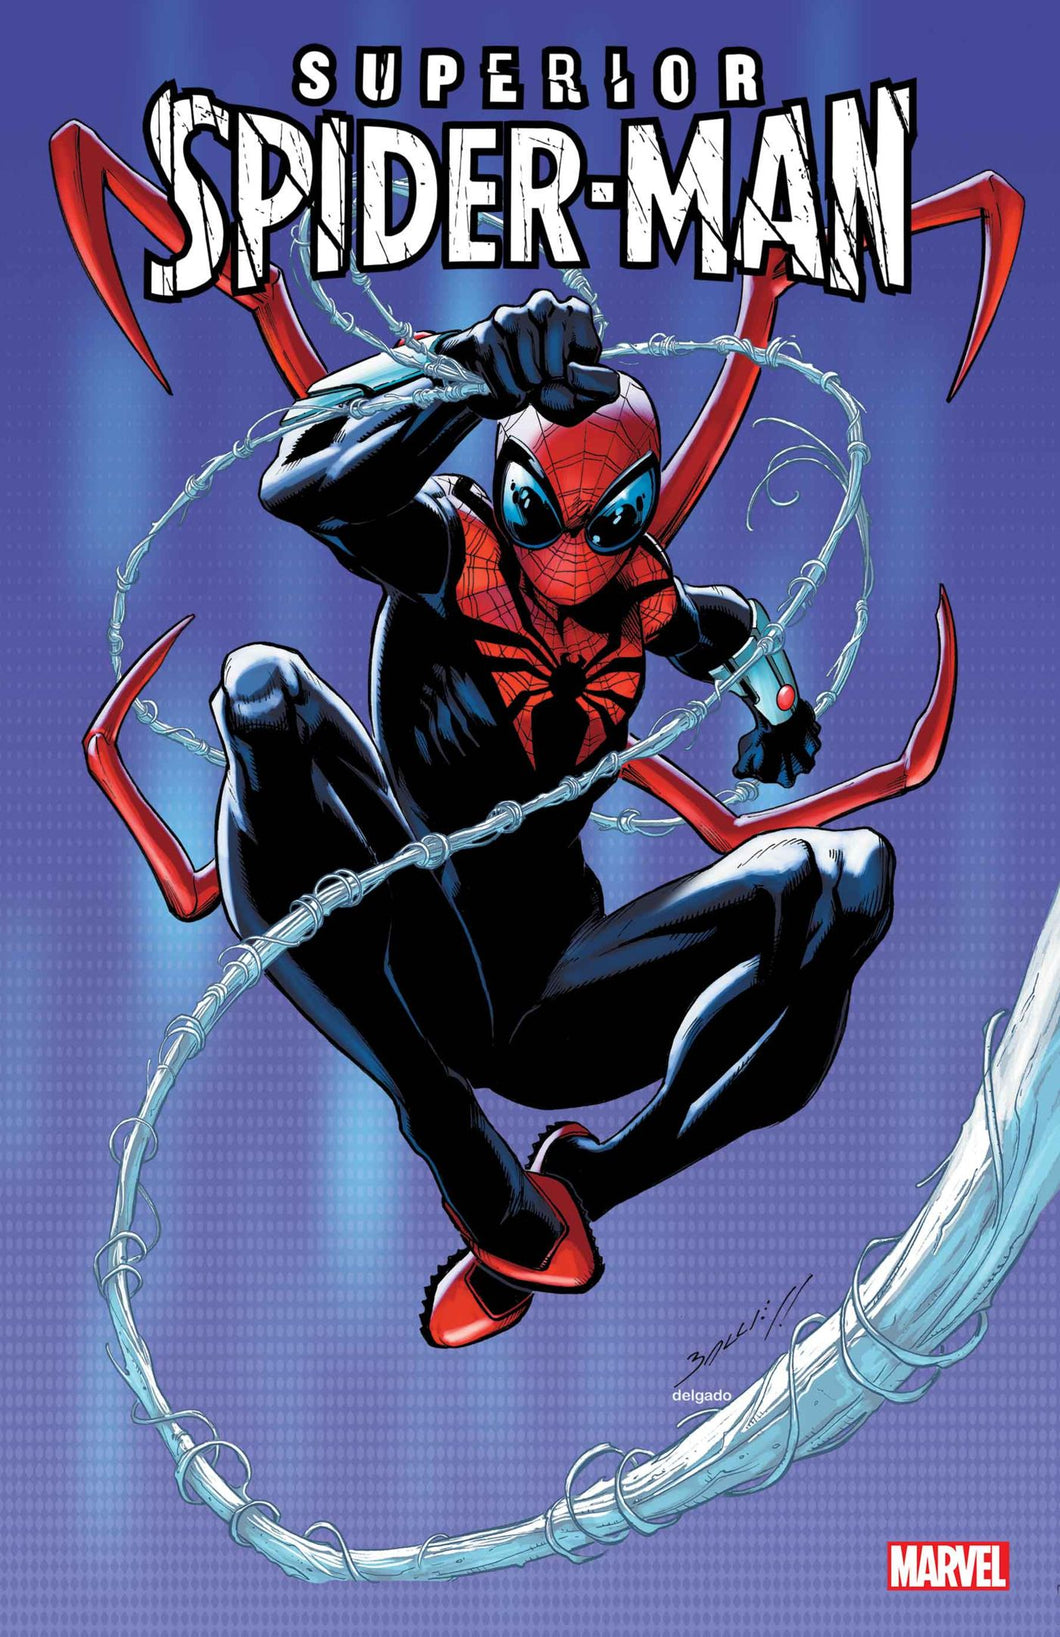 SUPERIOR SPIDER-MAN #1 (MARK BAGLEY COVER)